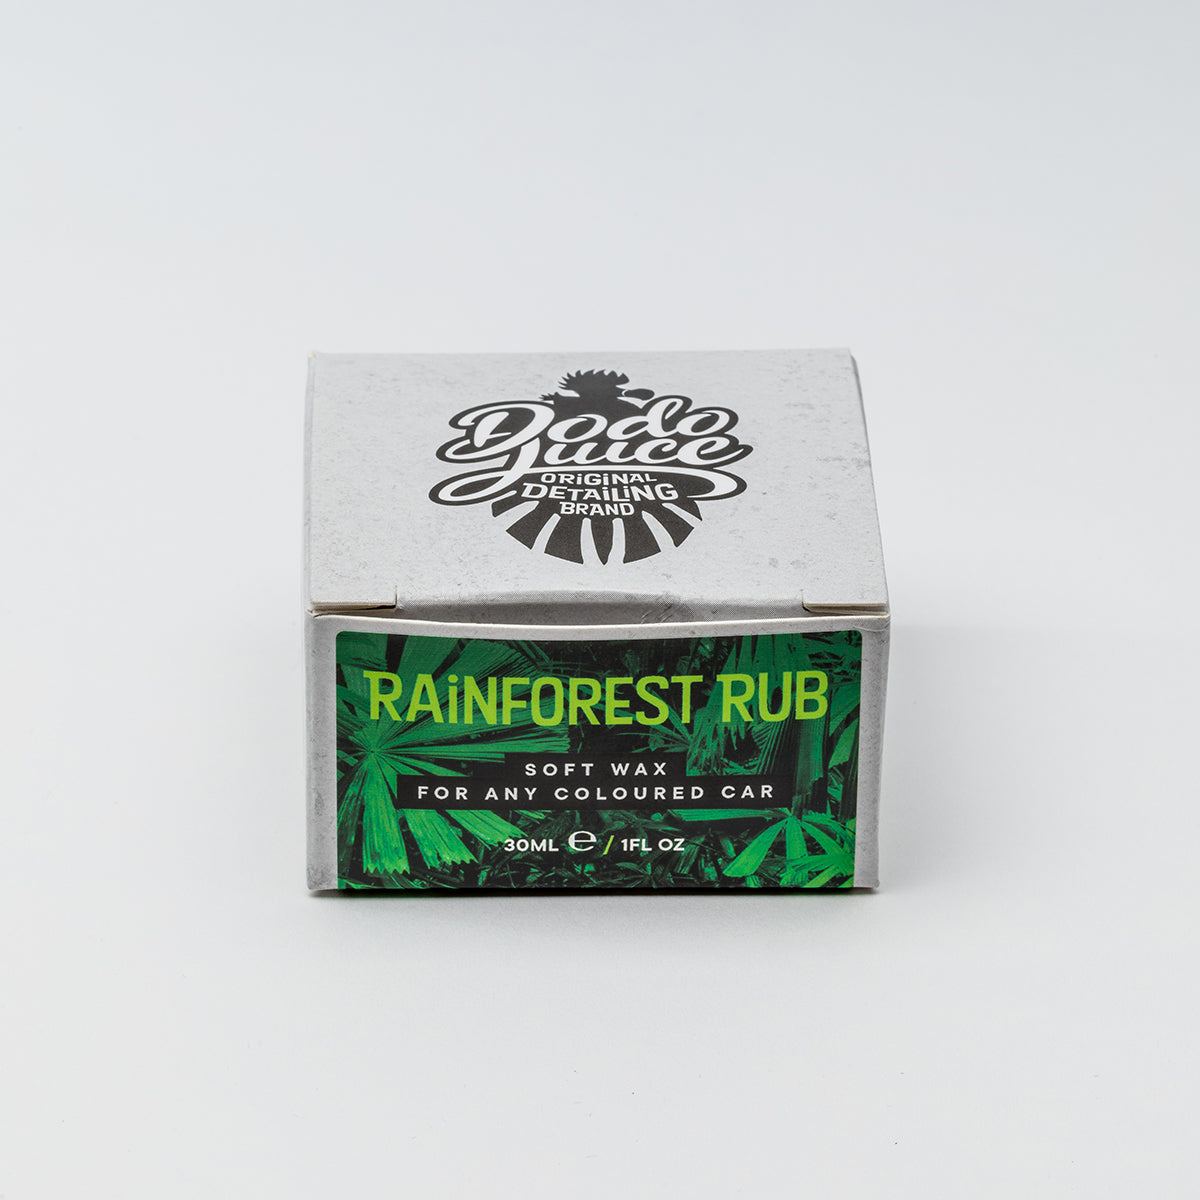 Rainforest Rub 30ml - our original carnauba soft wax - for any colour car HS 3404900000